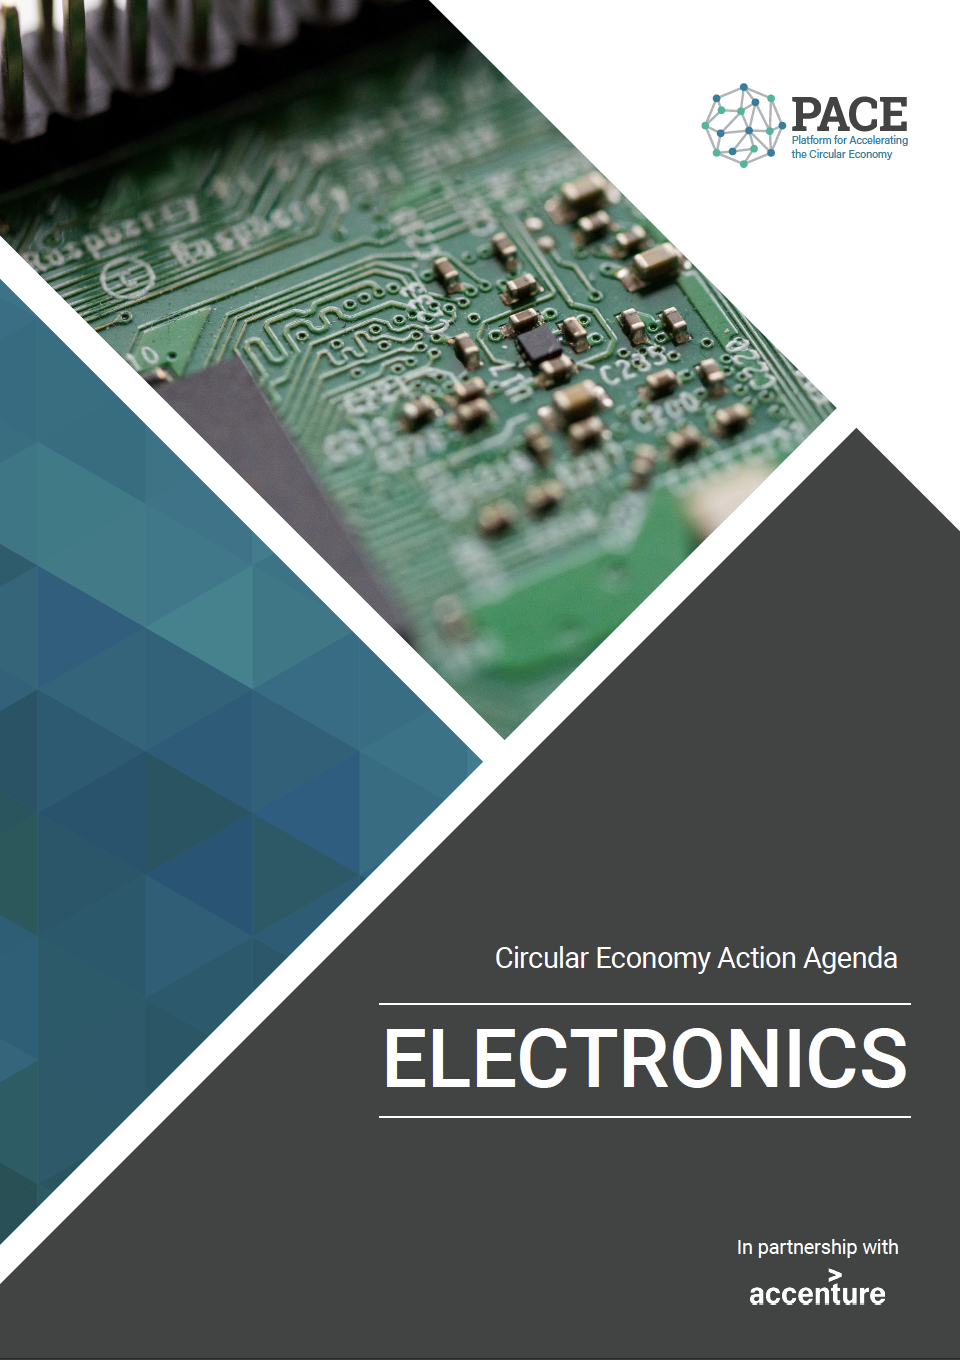 The Circular Economy Action Agenda for Electronics 